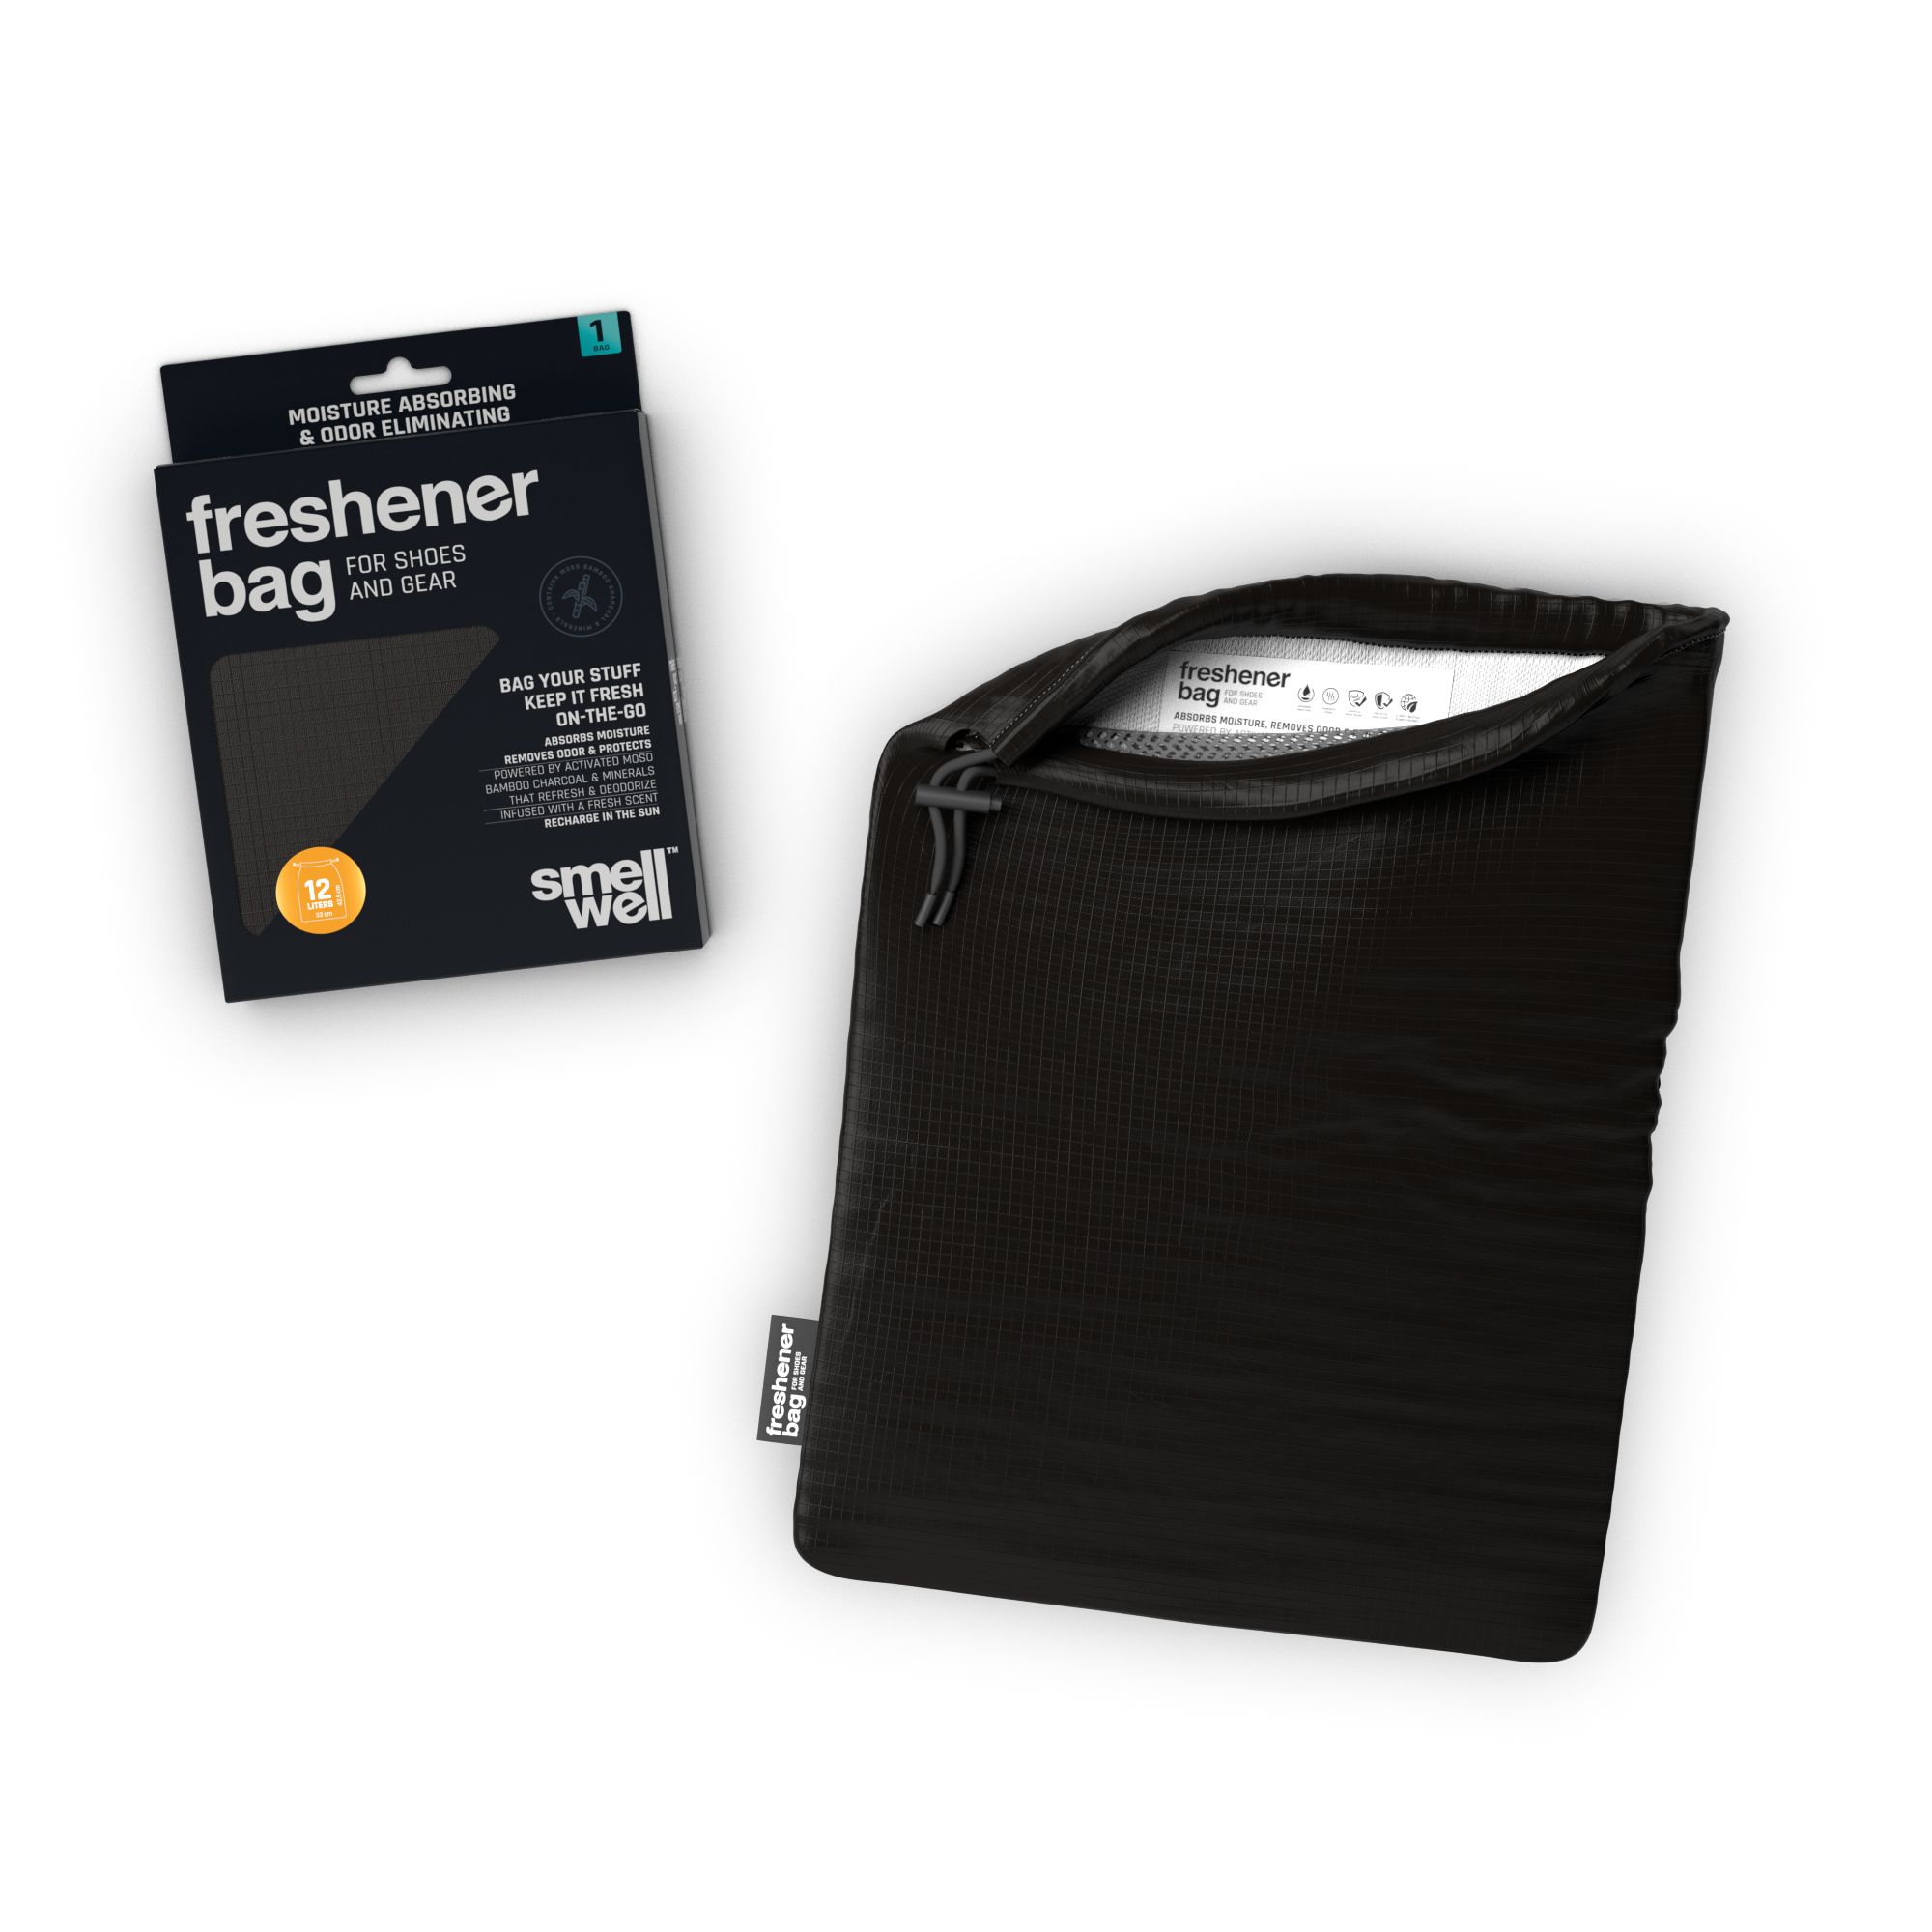 SmellWell Freshener Bag (Black)